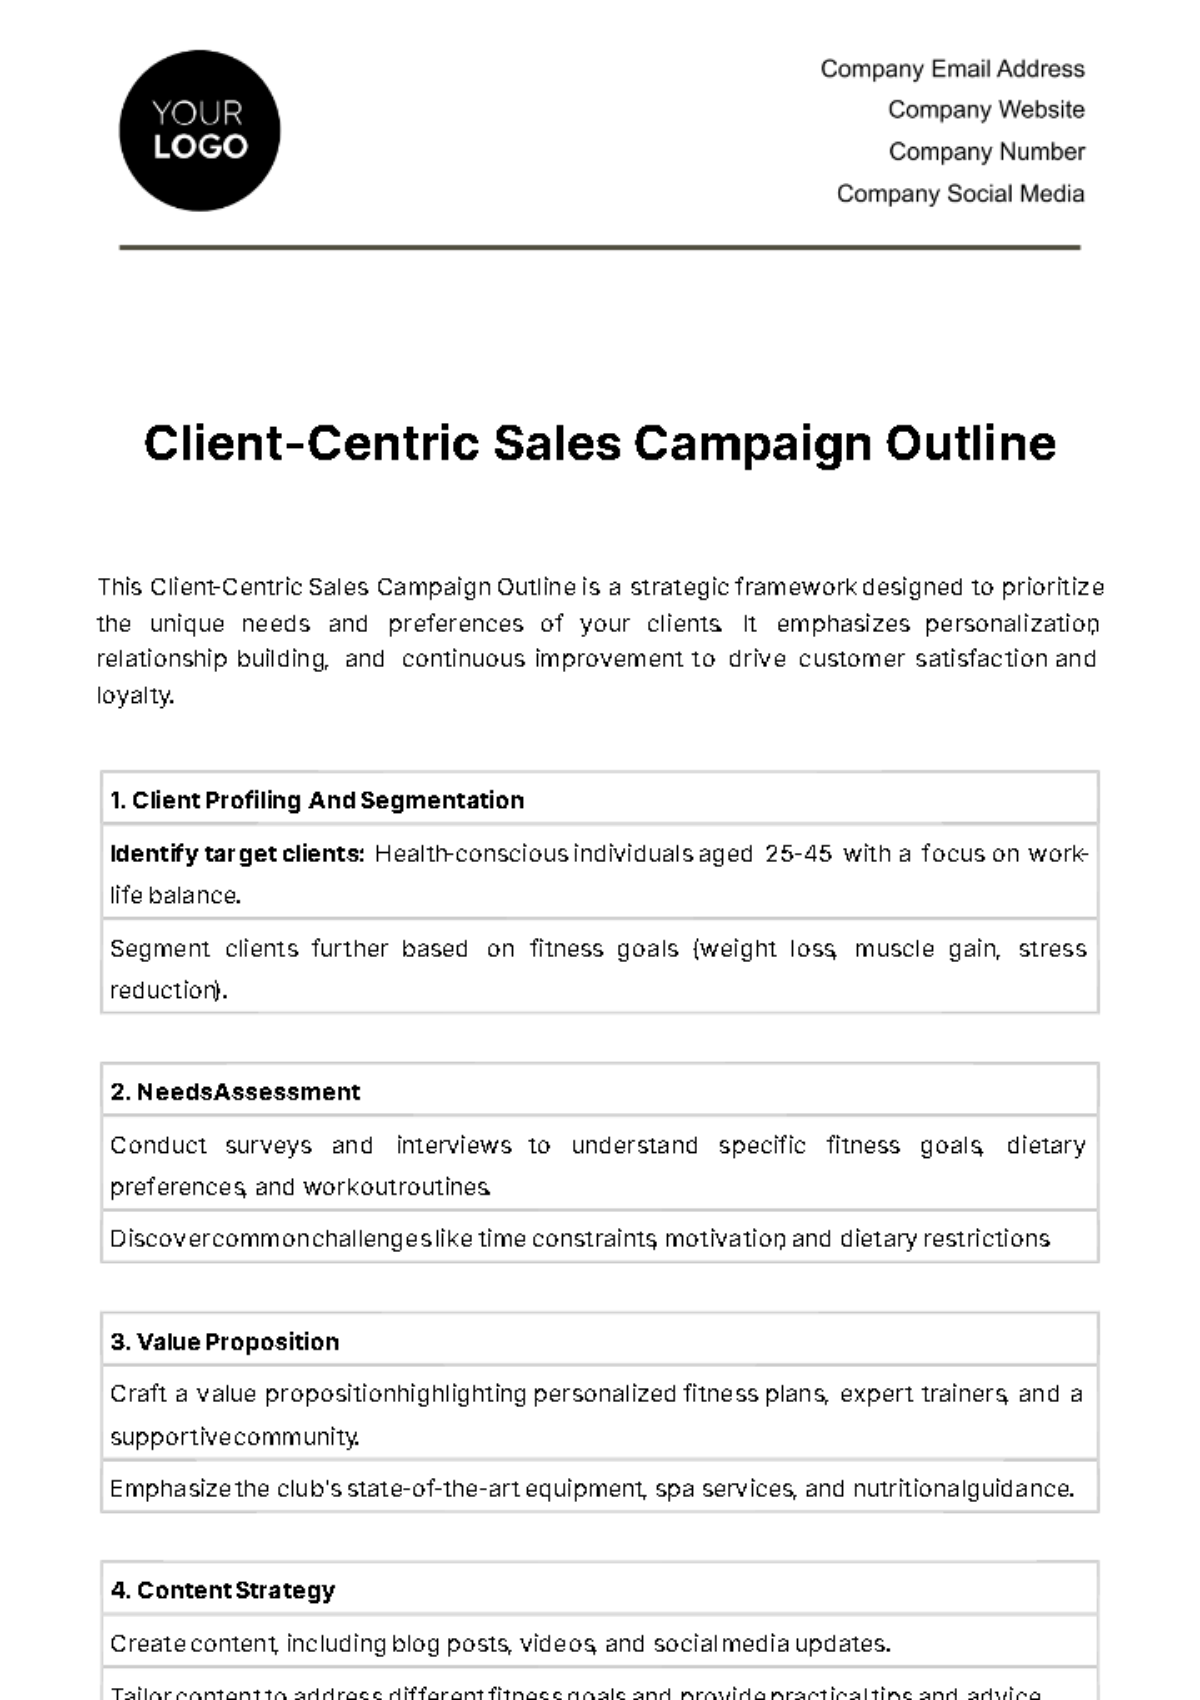 Client-centric Sales Campaign Outline Template